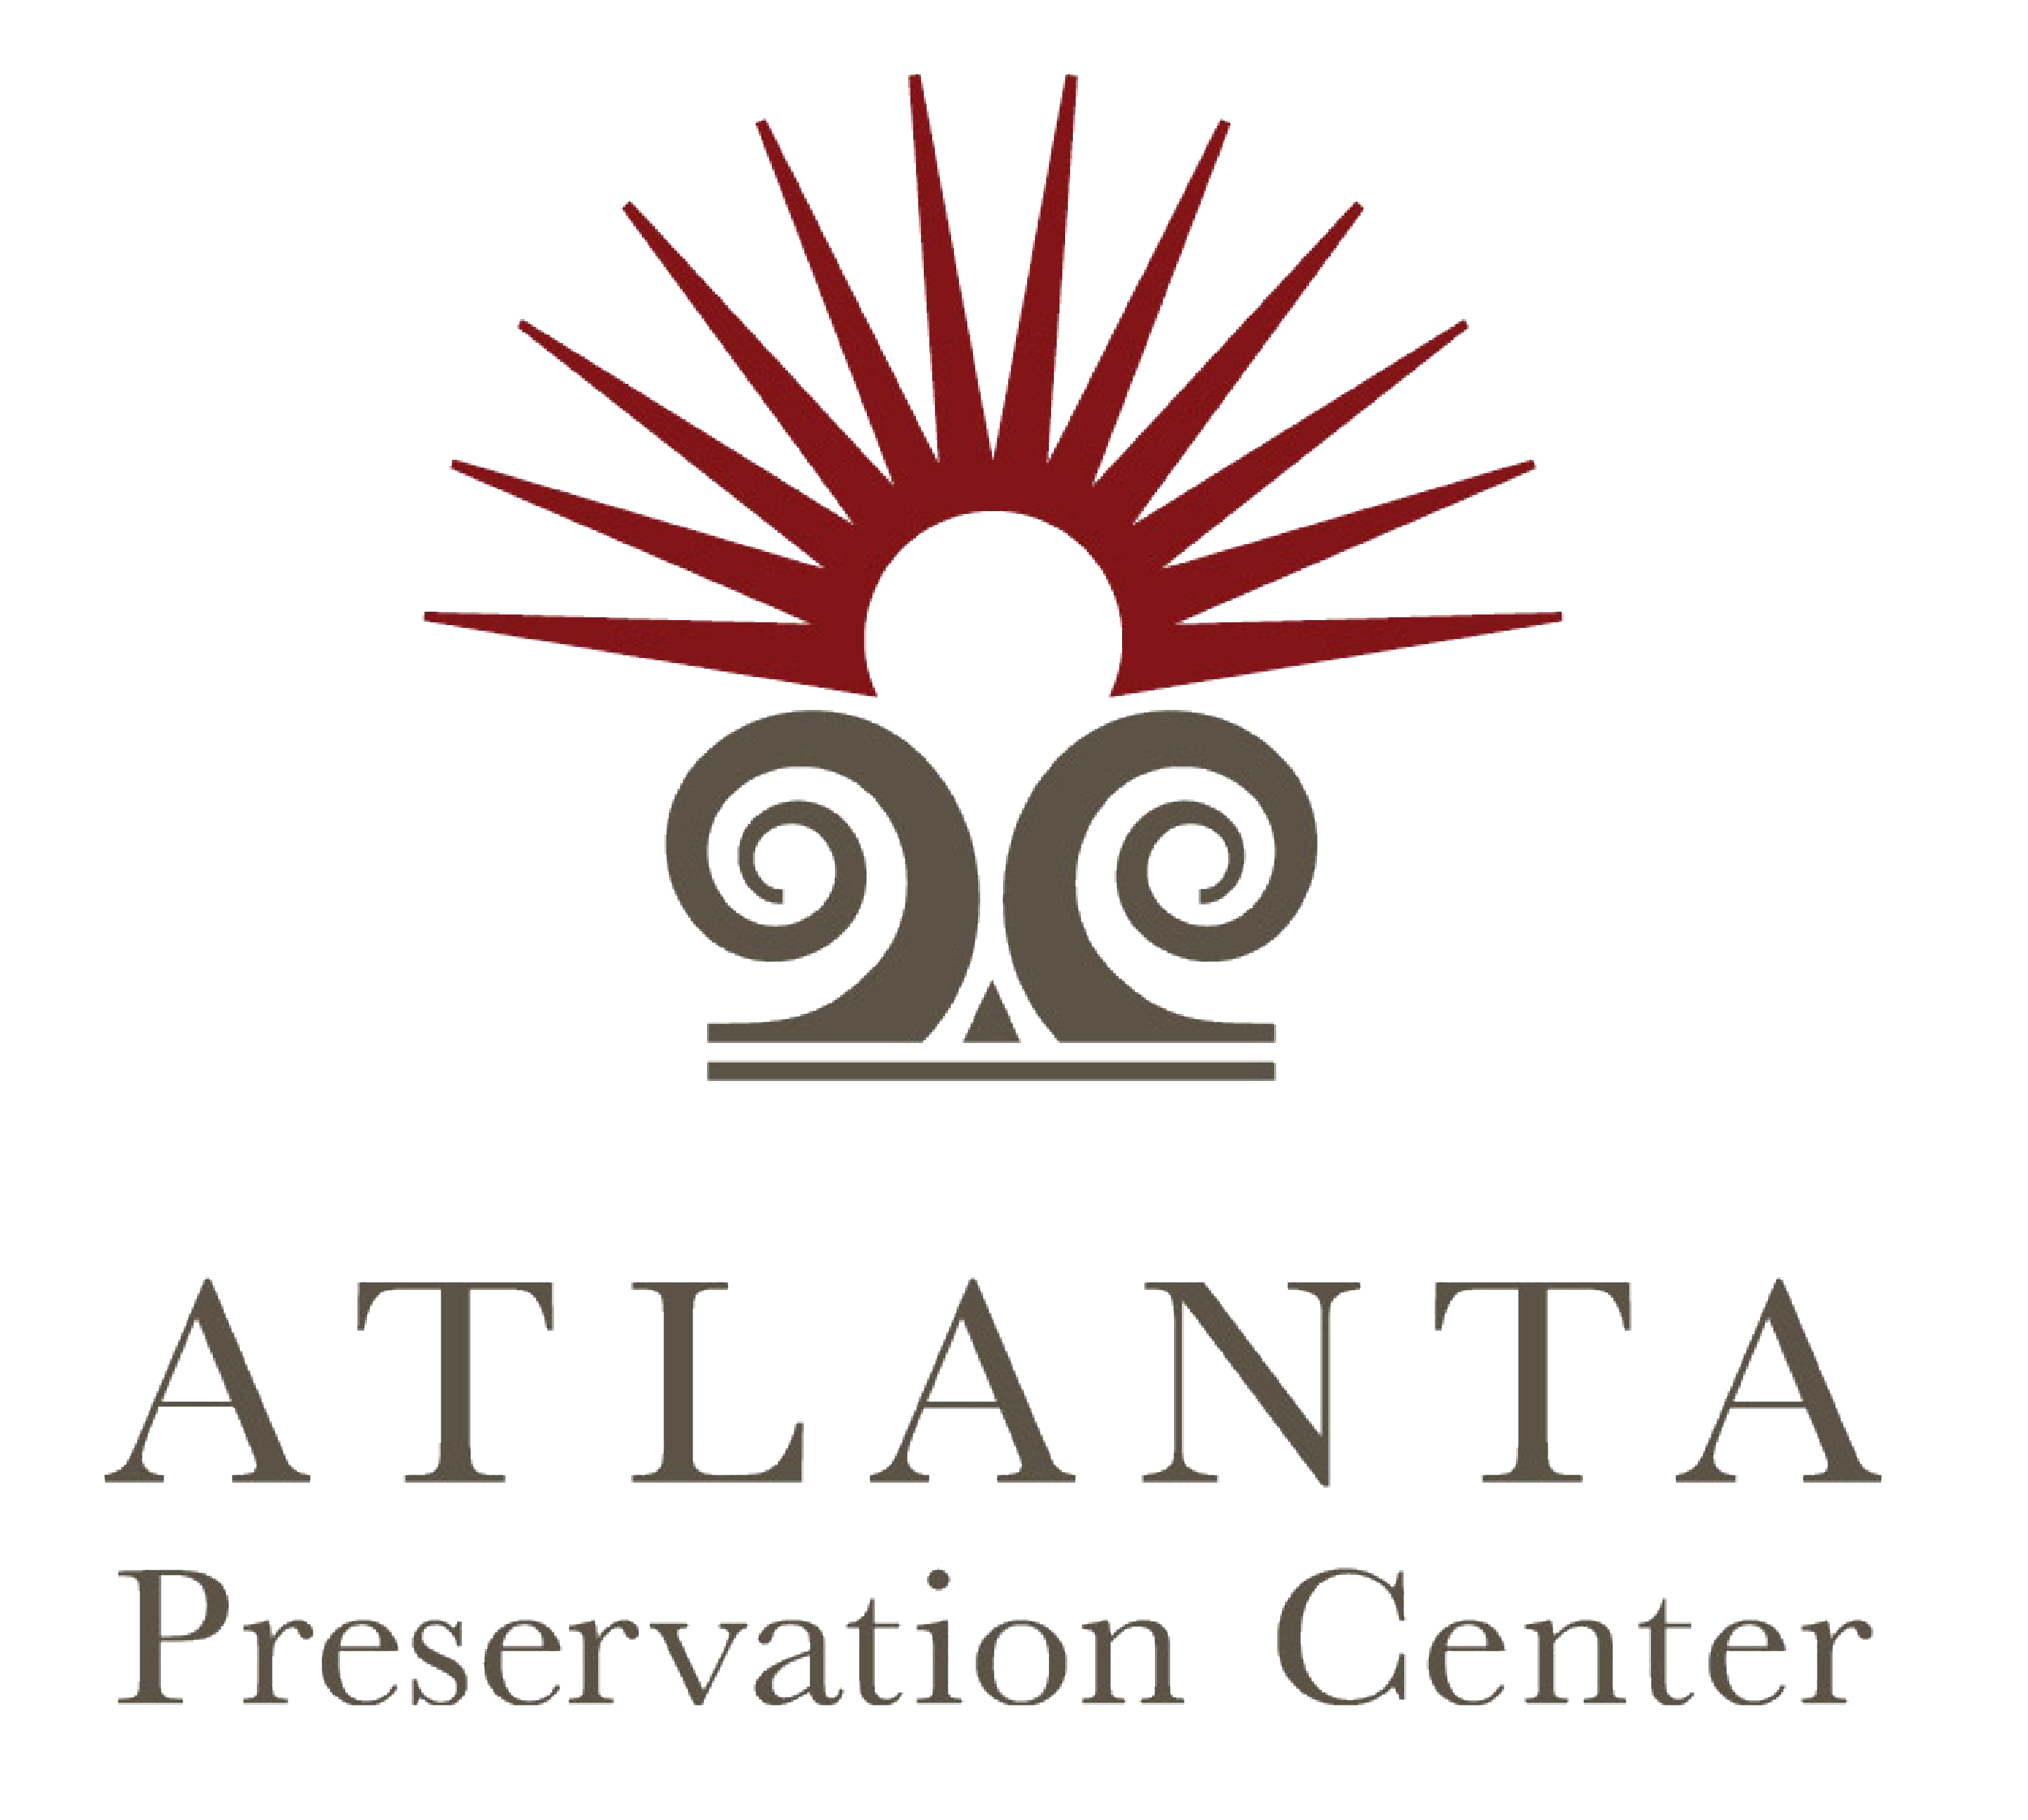 Atlanta Preservation Center